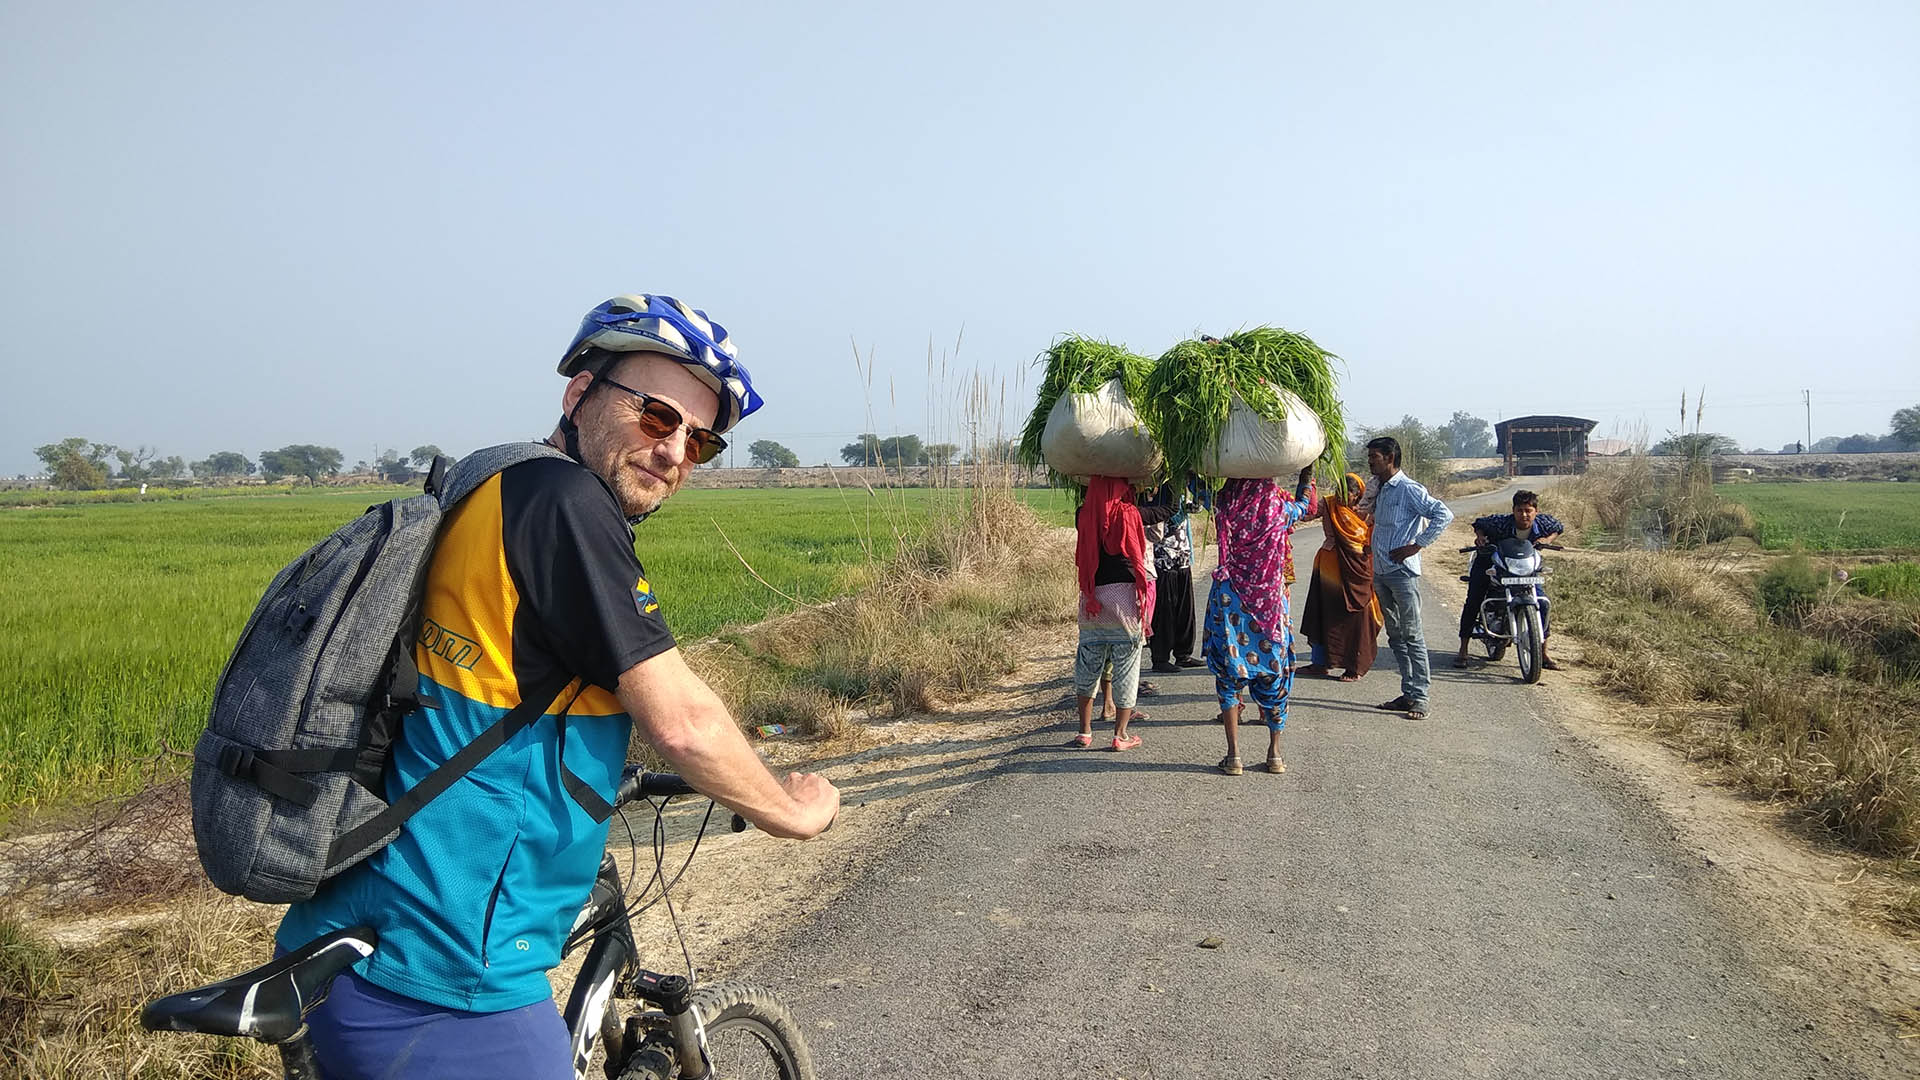 Delhi Agra cycling tour - 2 Days